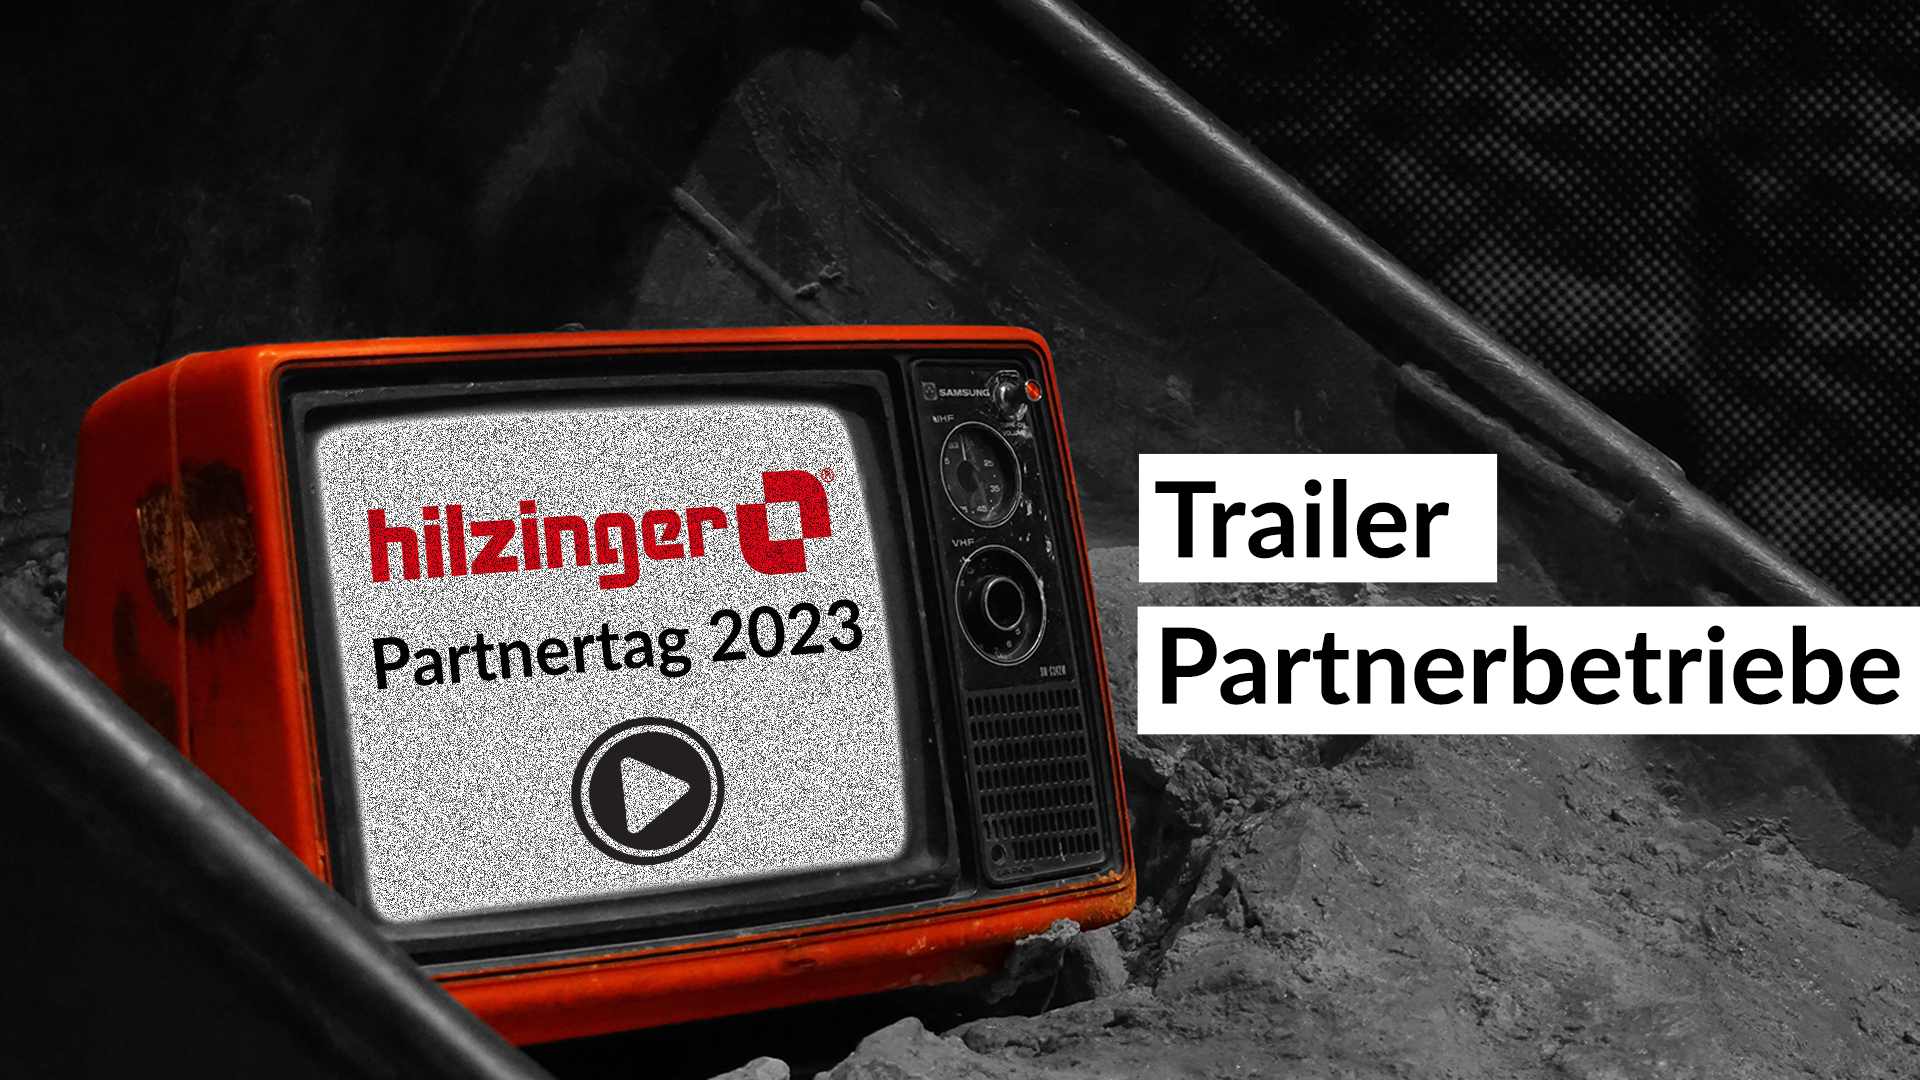 Trailer hilzinger Partnertag 2023 für Fachhändler, Partner